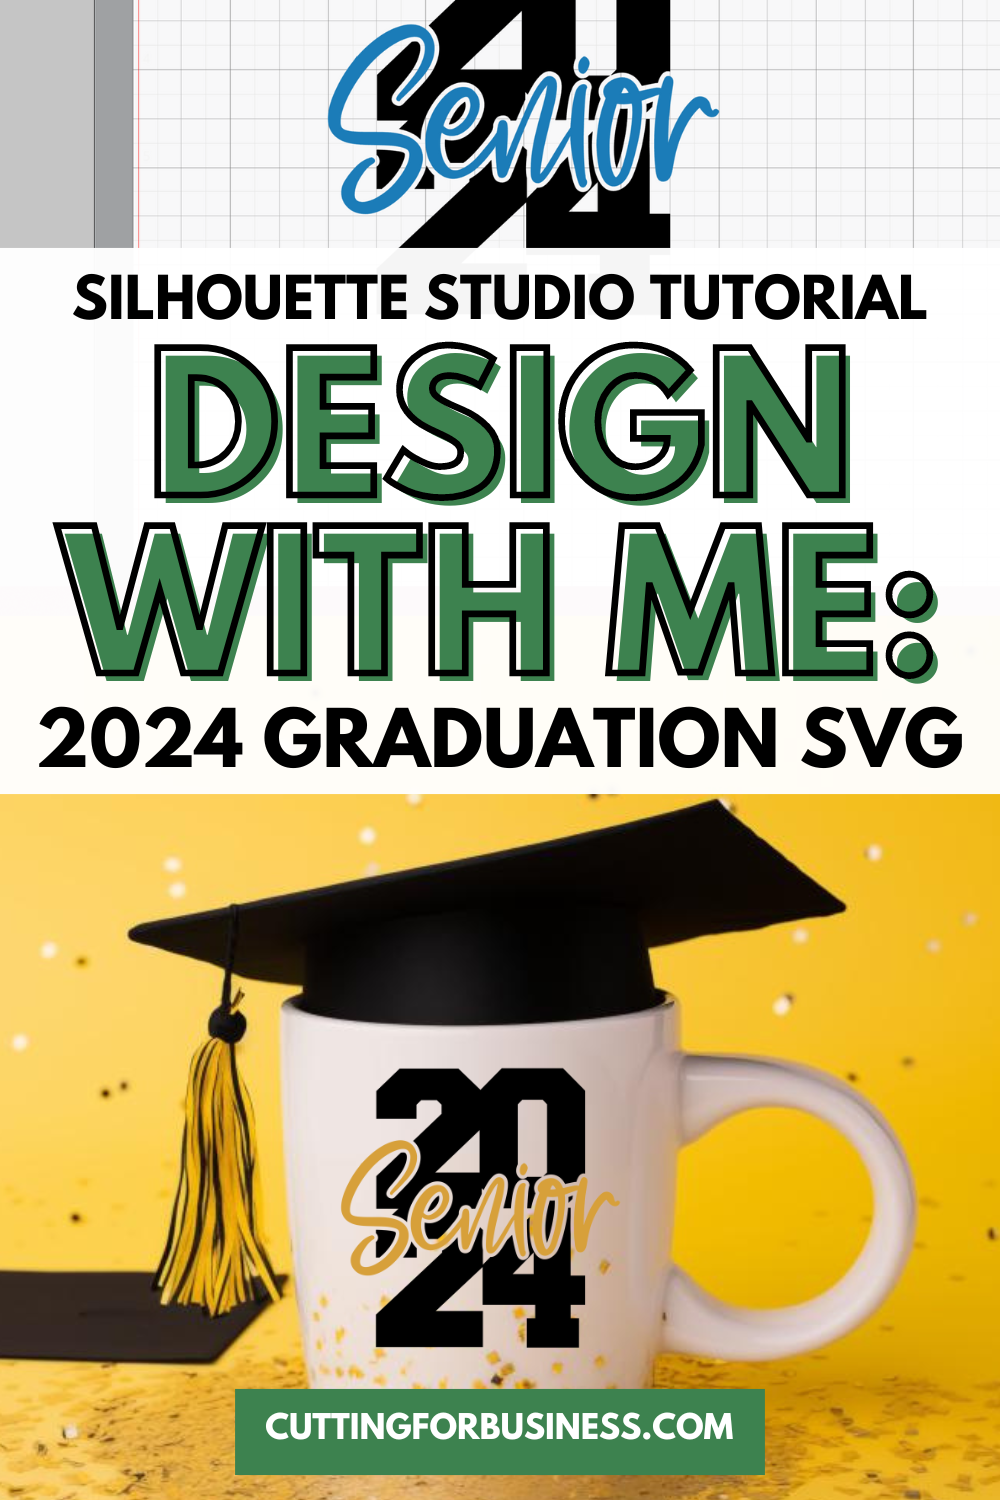 Silhouette Studio Tutorial: 2024 Graduation SVG - cuttingforbusiness.com